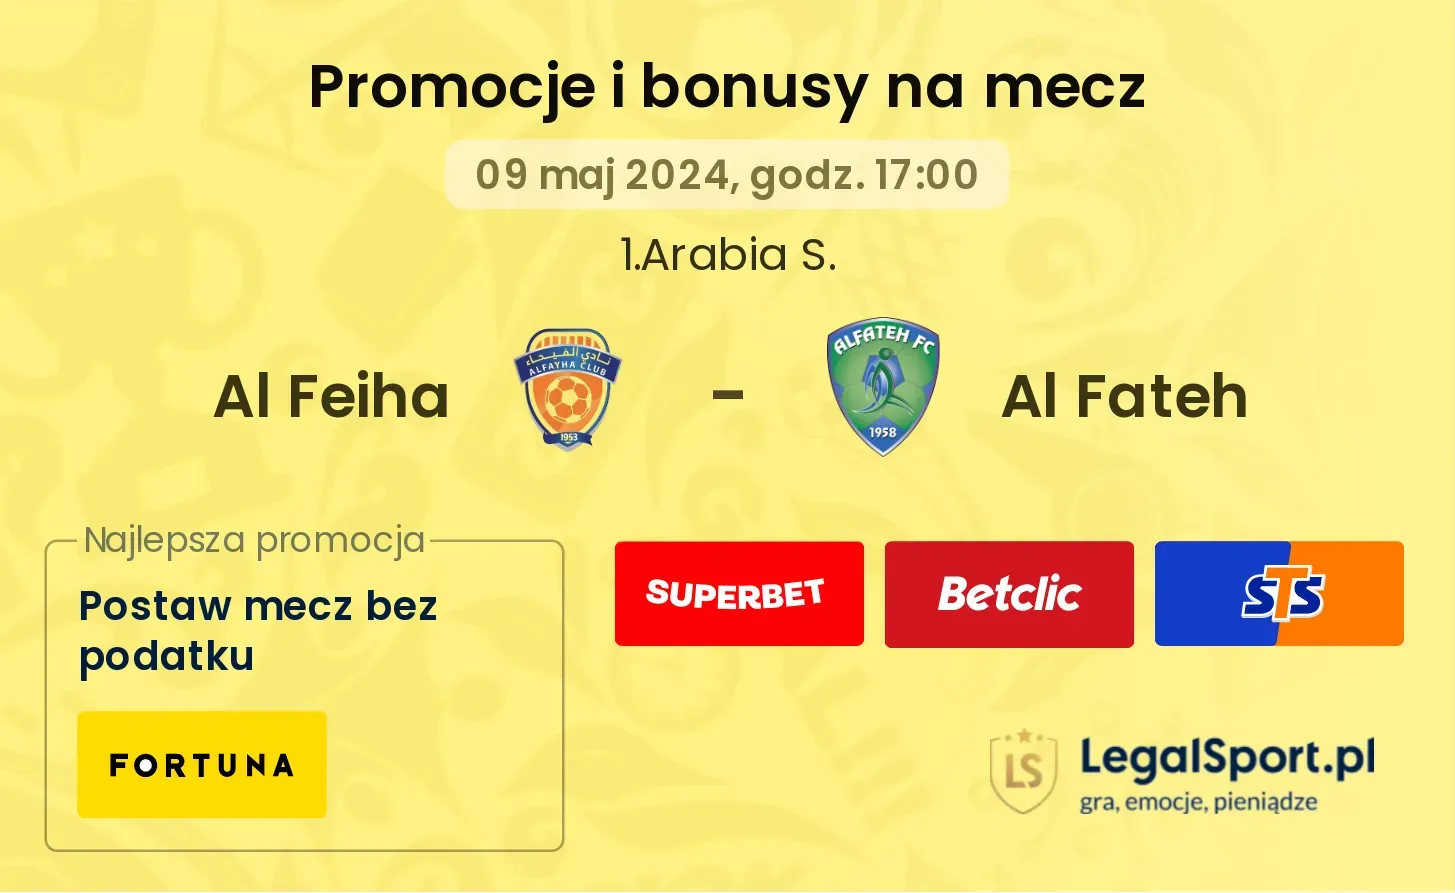 Al Feiha - Al Fateh promocje bonusy na mecz